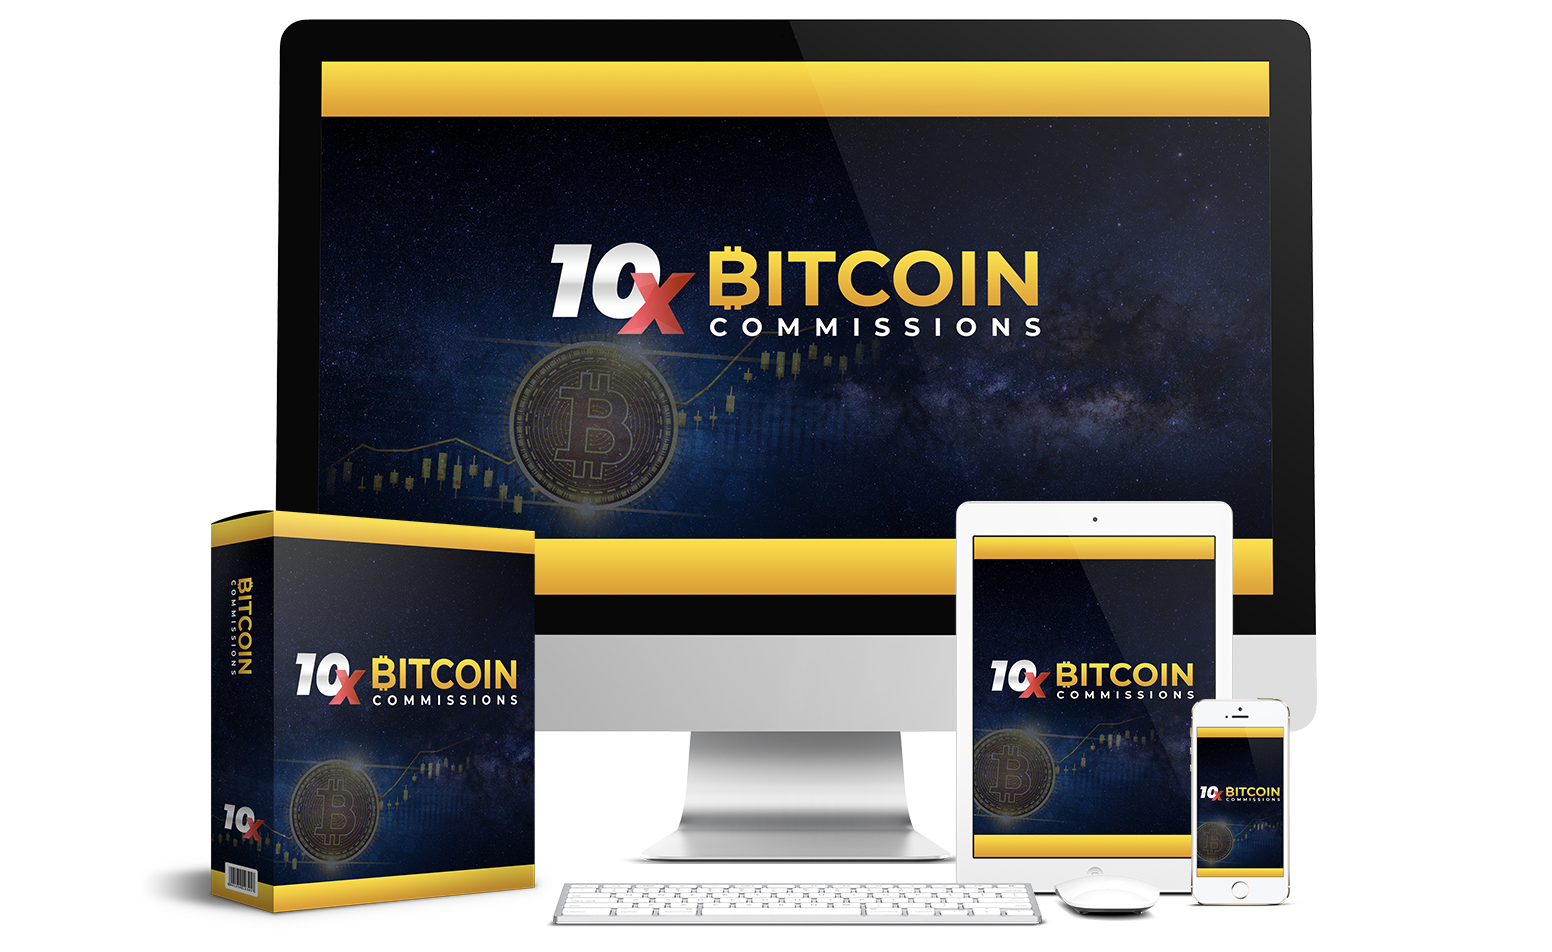 10 Bitcoin Commission